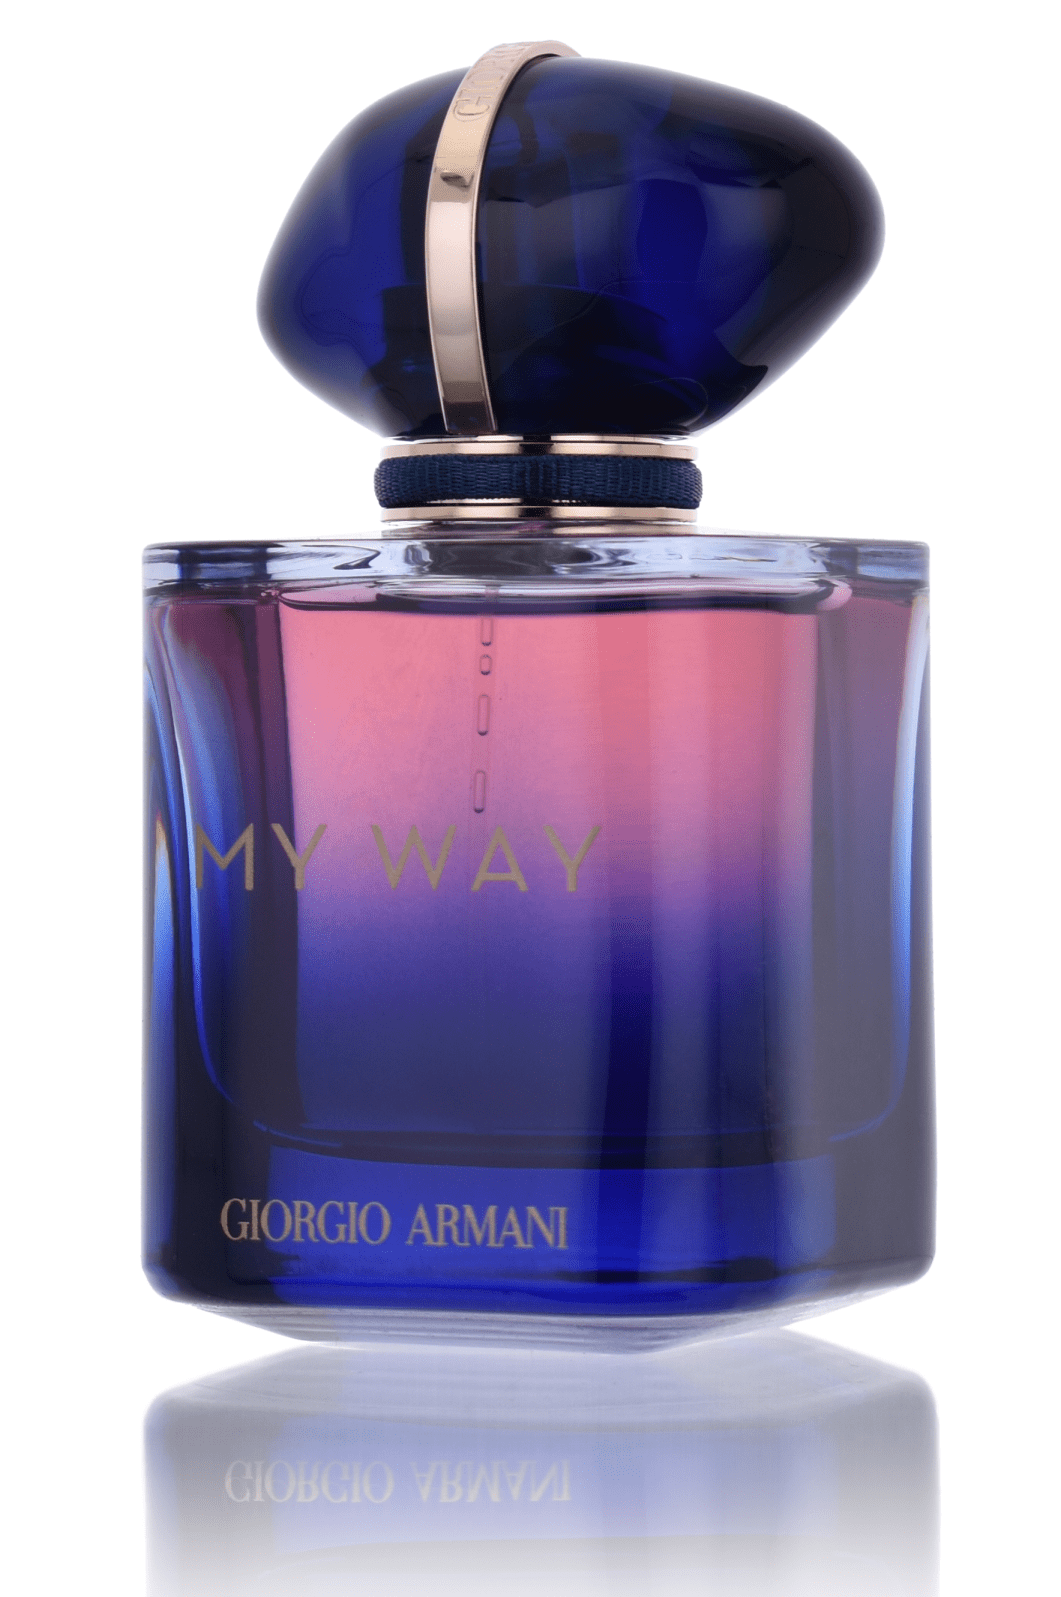 Armani My Way Le Parfum 5 ml Abfüllung